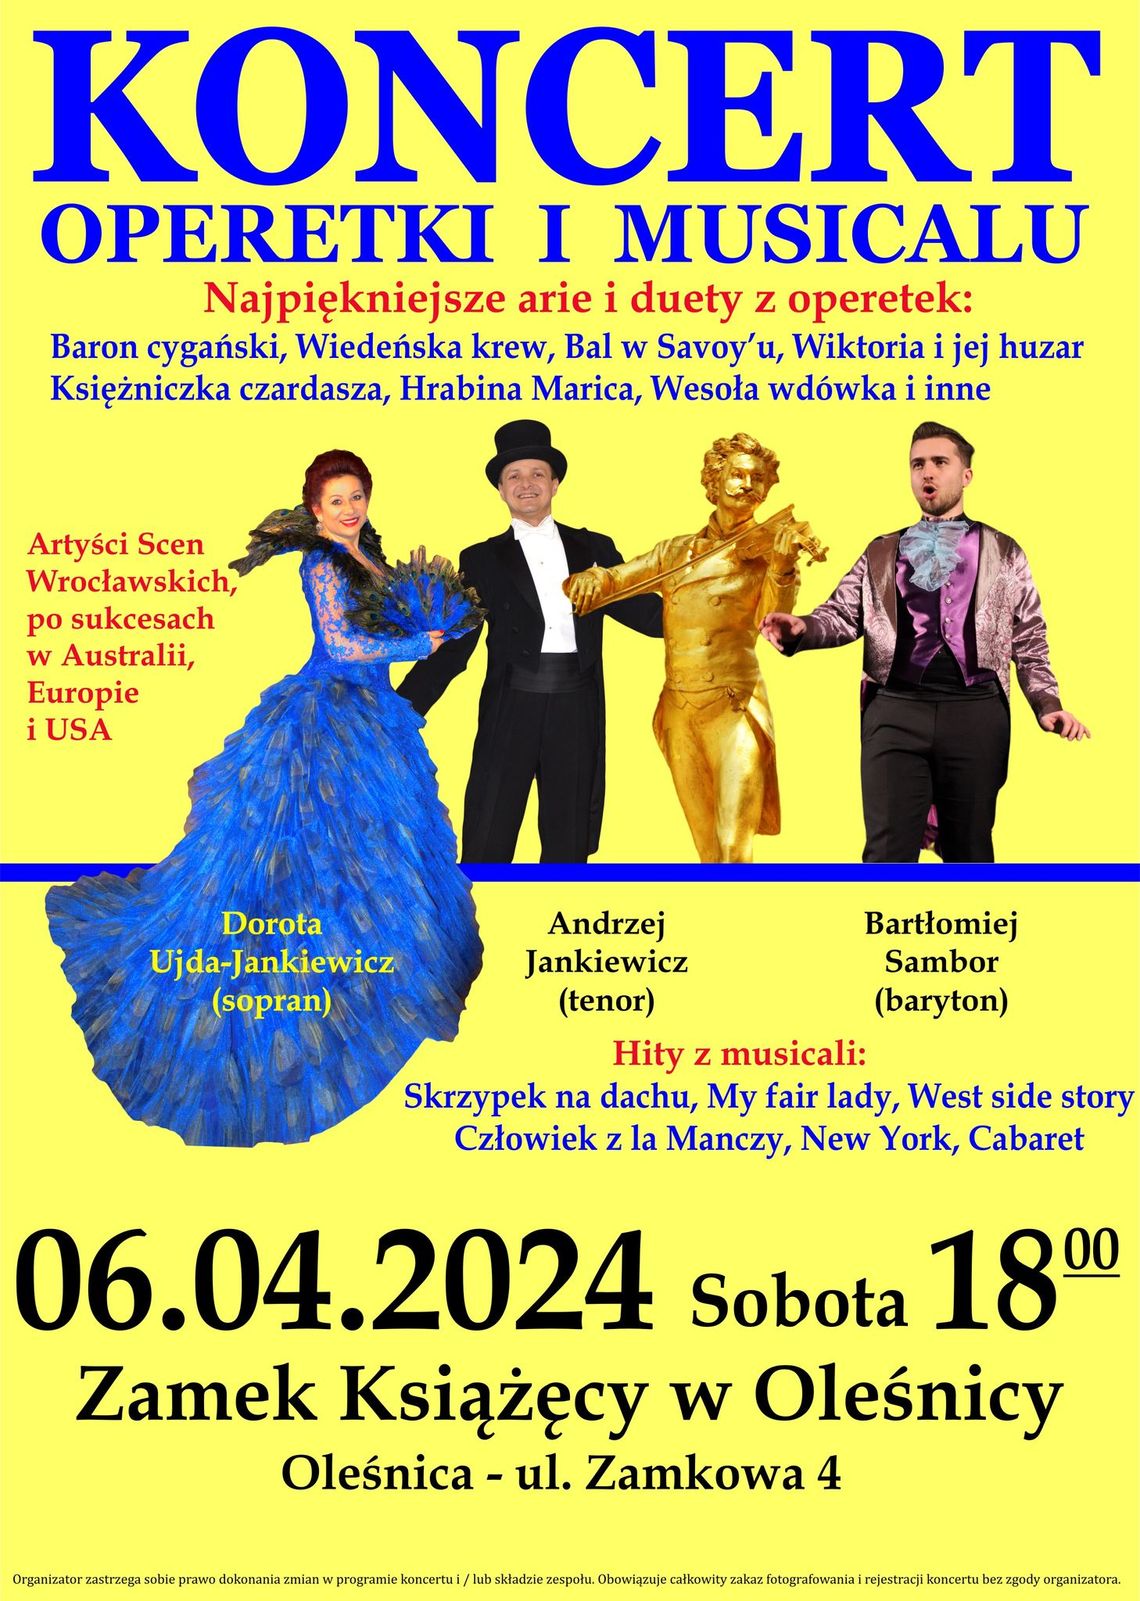 Koncert operetki i musicalu